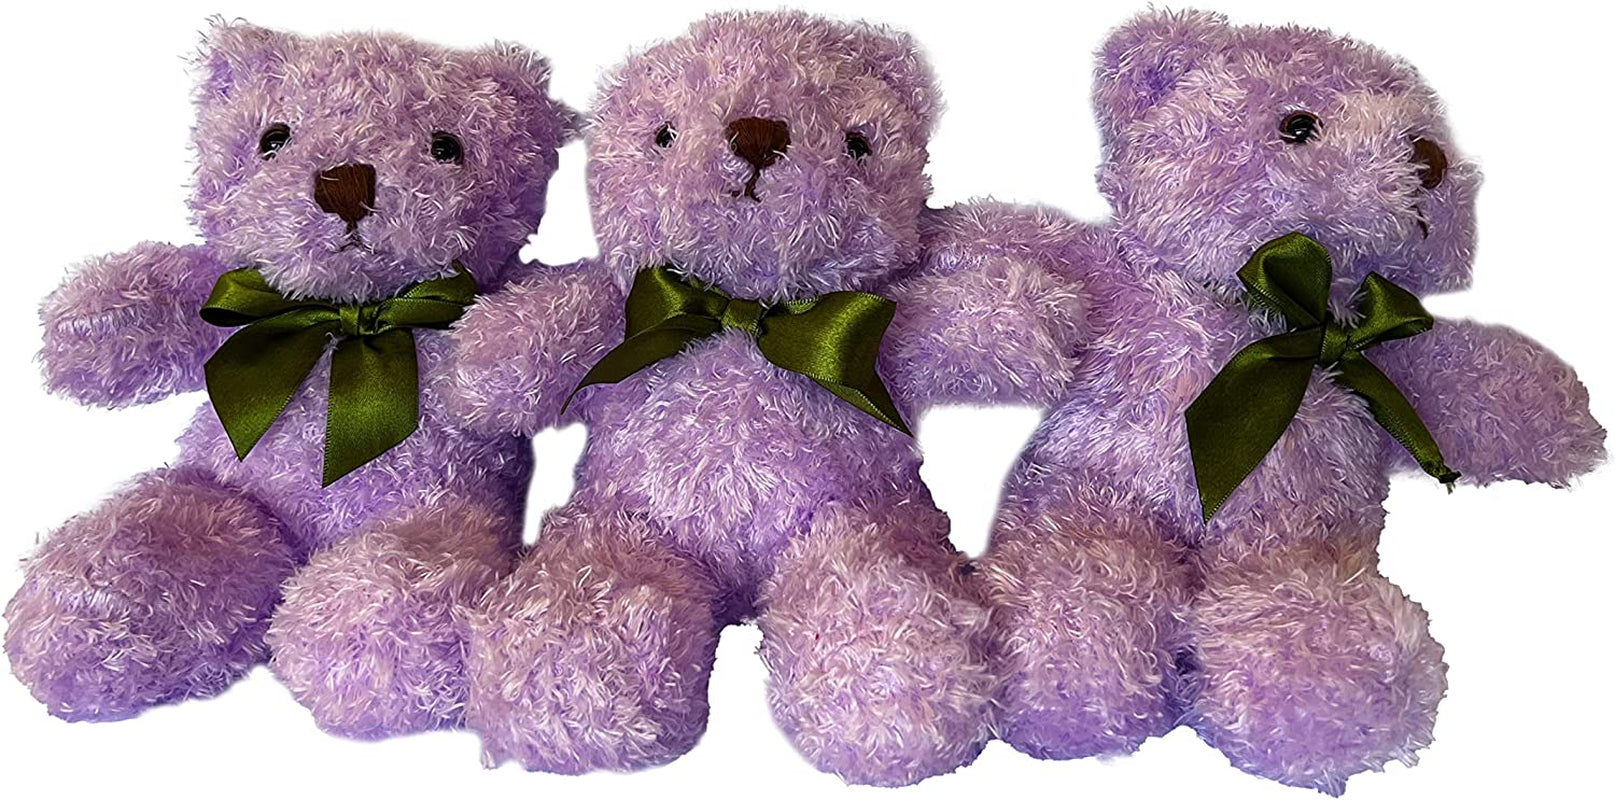 Teddy Bear Plush - Cute Teddy Bears Stuffed Animals - 3-Pack of Stuffed Bears - 9 Inch Height (Purple)